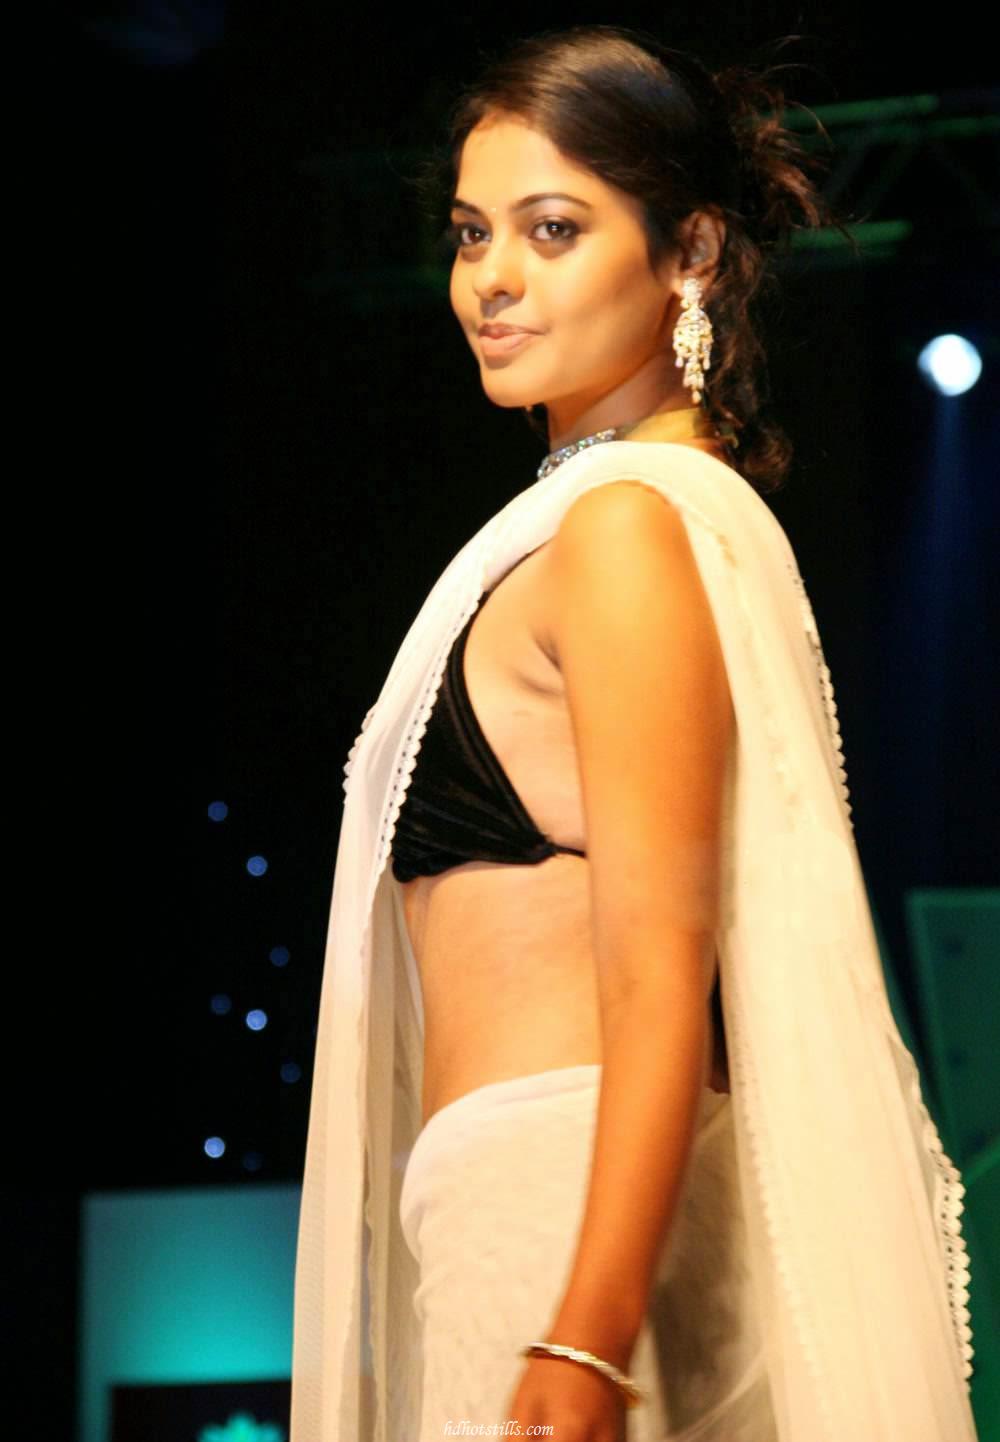 Bindu Madhavi Hot In Saree Bindu Madhavi Hot Navel Pics In Saree Indian Actress Wallpapers